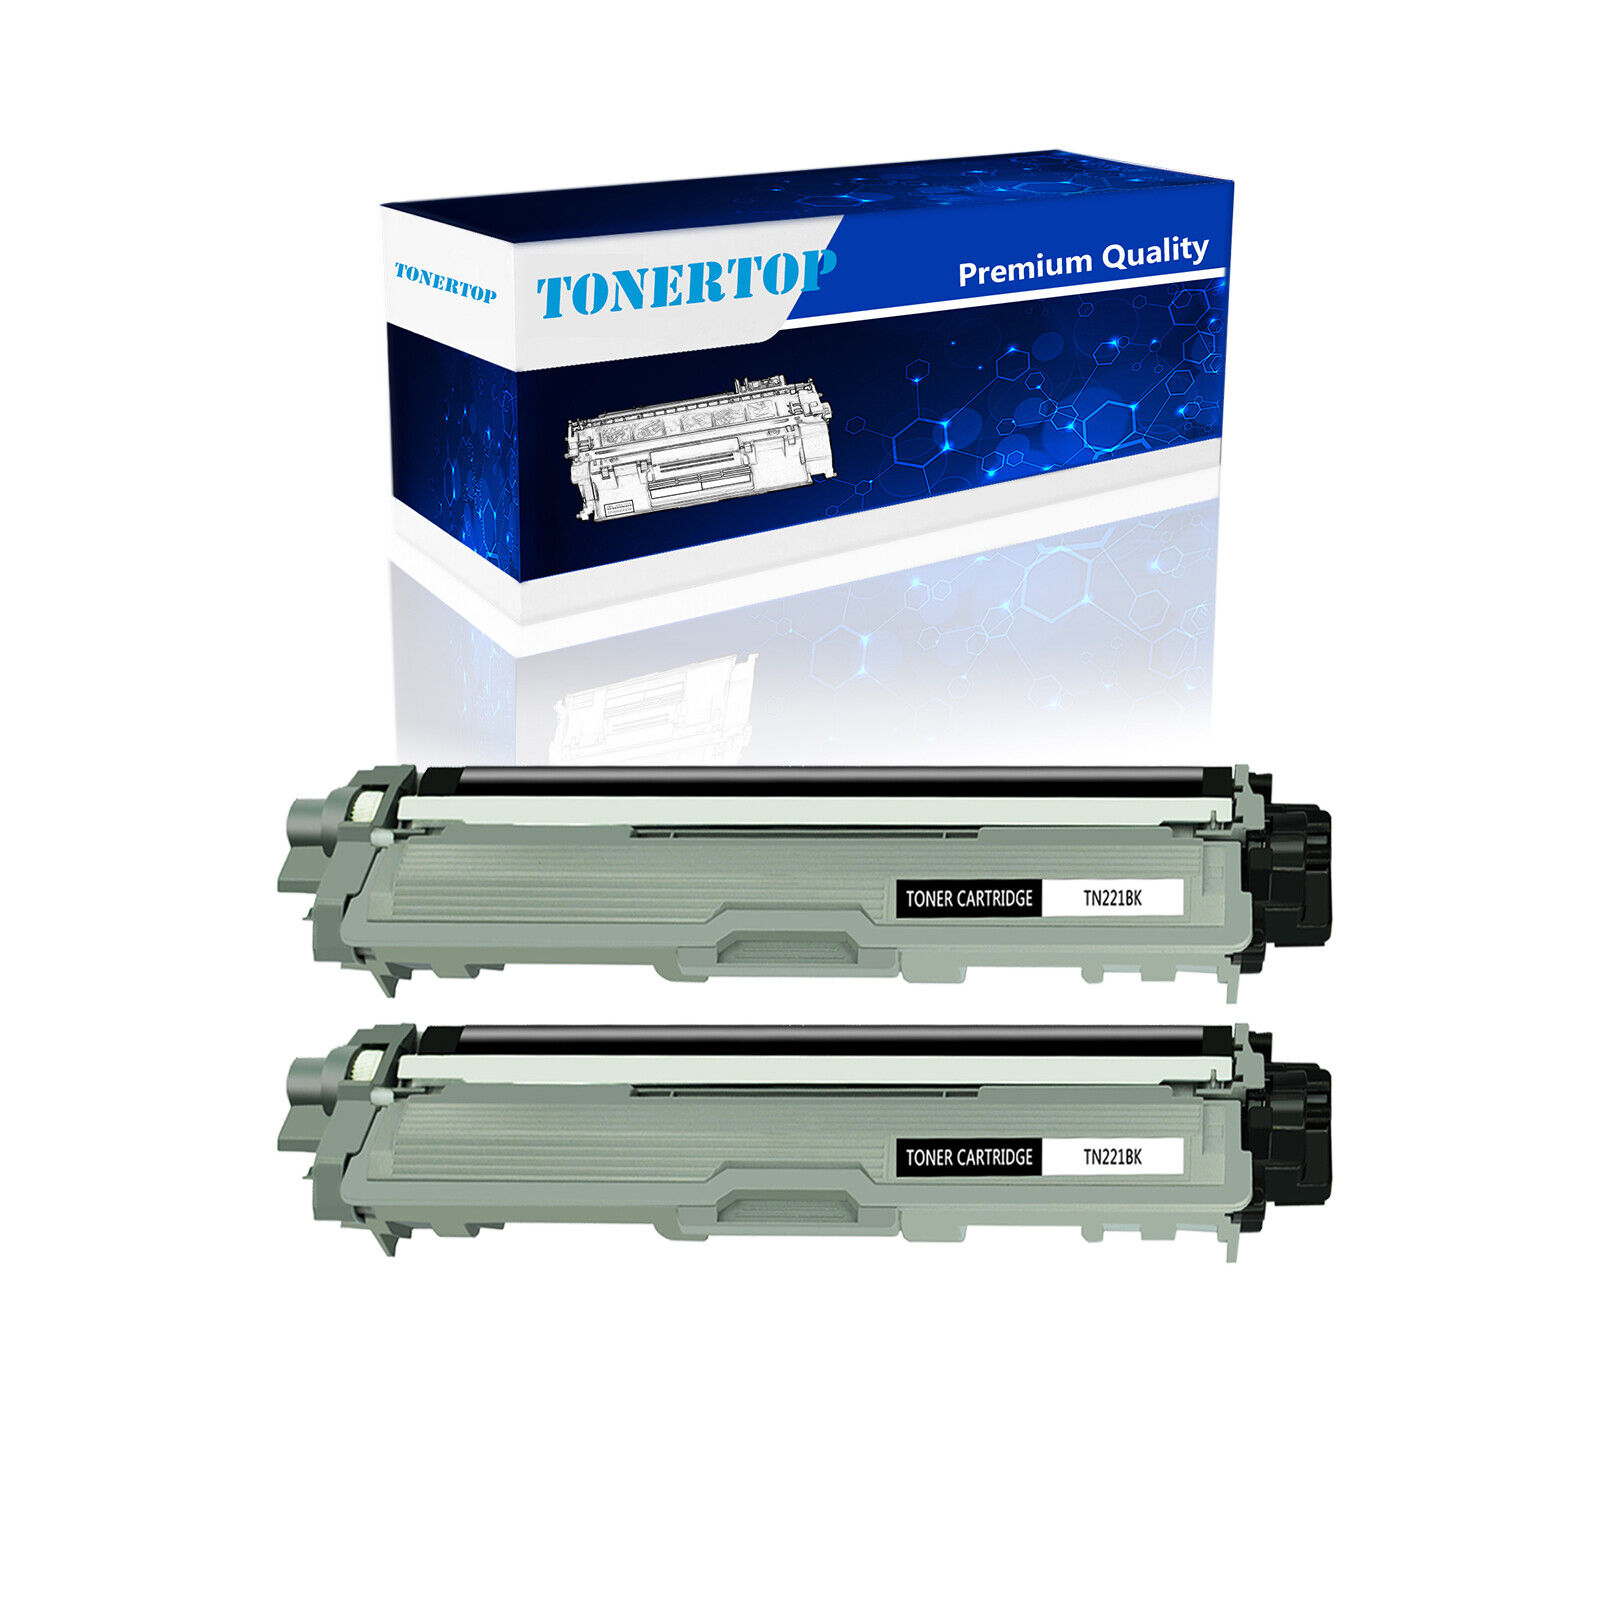 2 PK TN221 Black Toner Cartridge For Brother MFC-9130CW MFC-9330CDW MFC-9340CDW